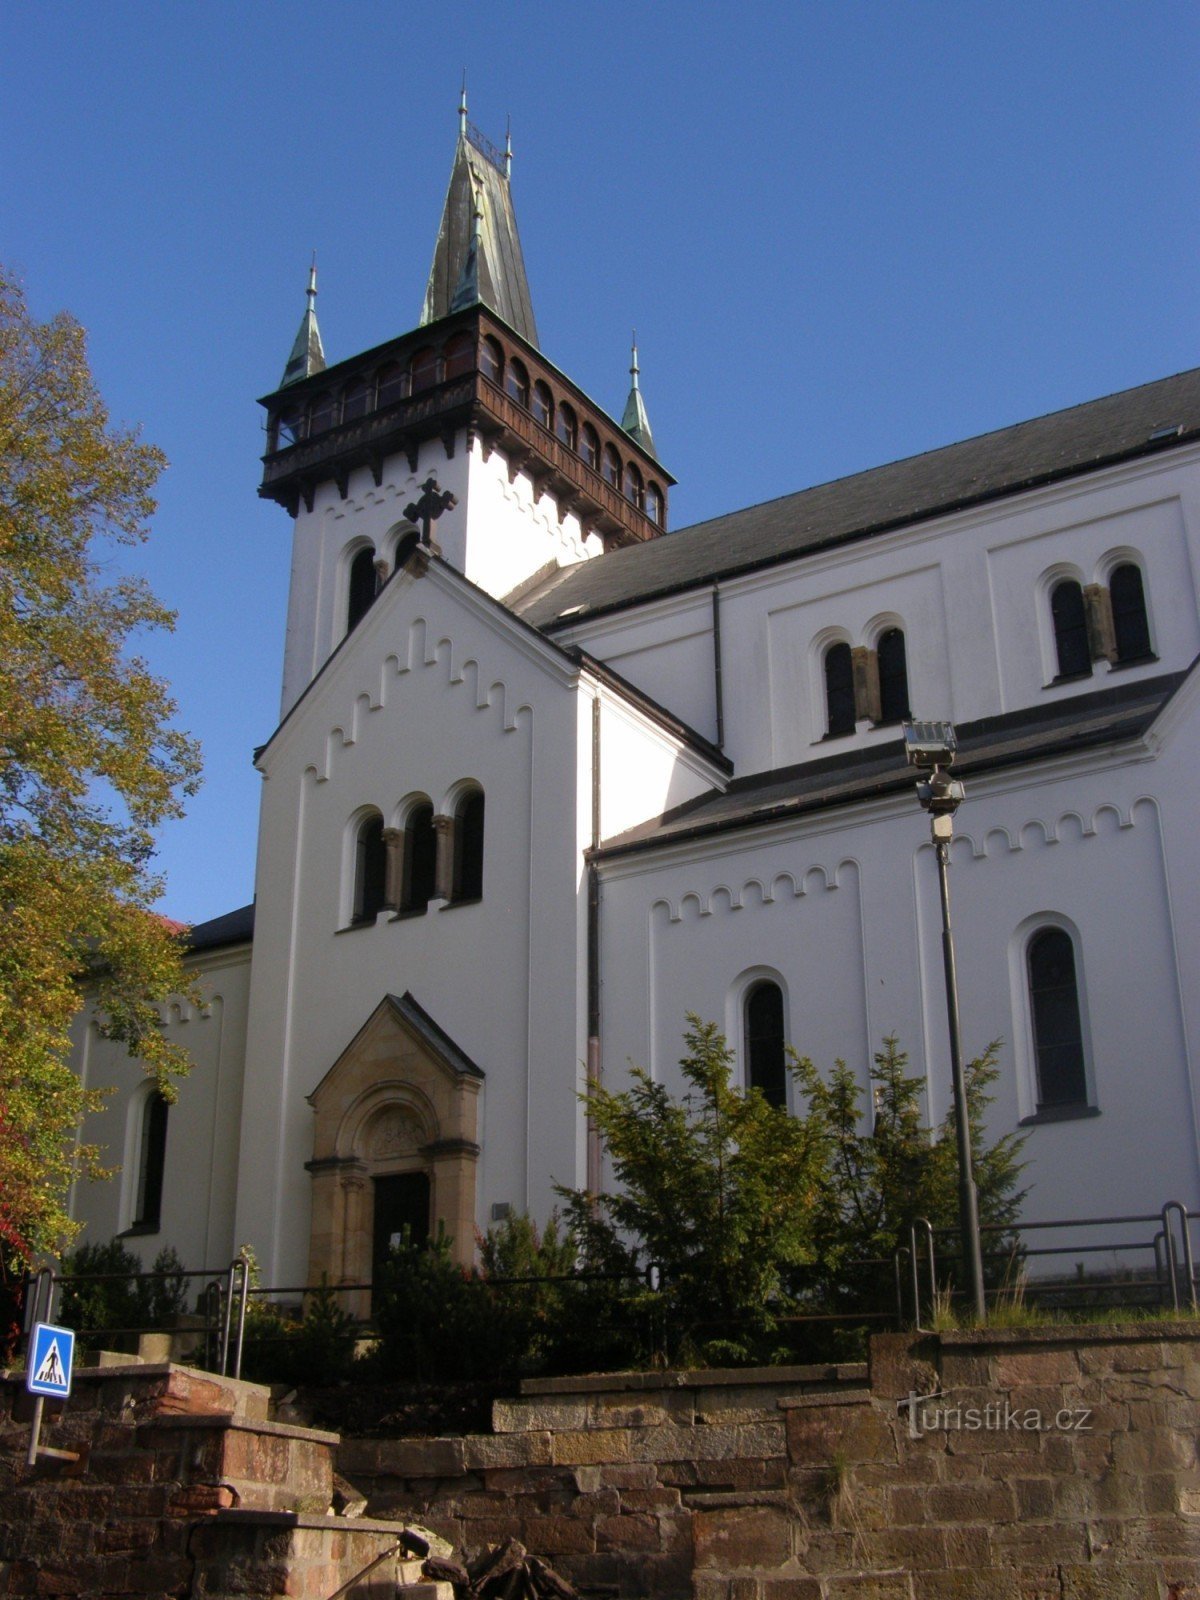 Semily - Kirche St. Peter und Paul